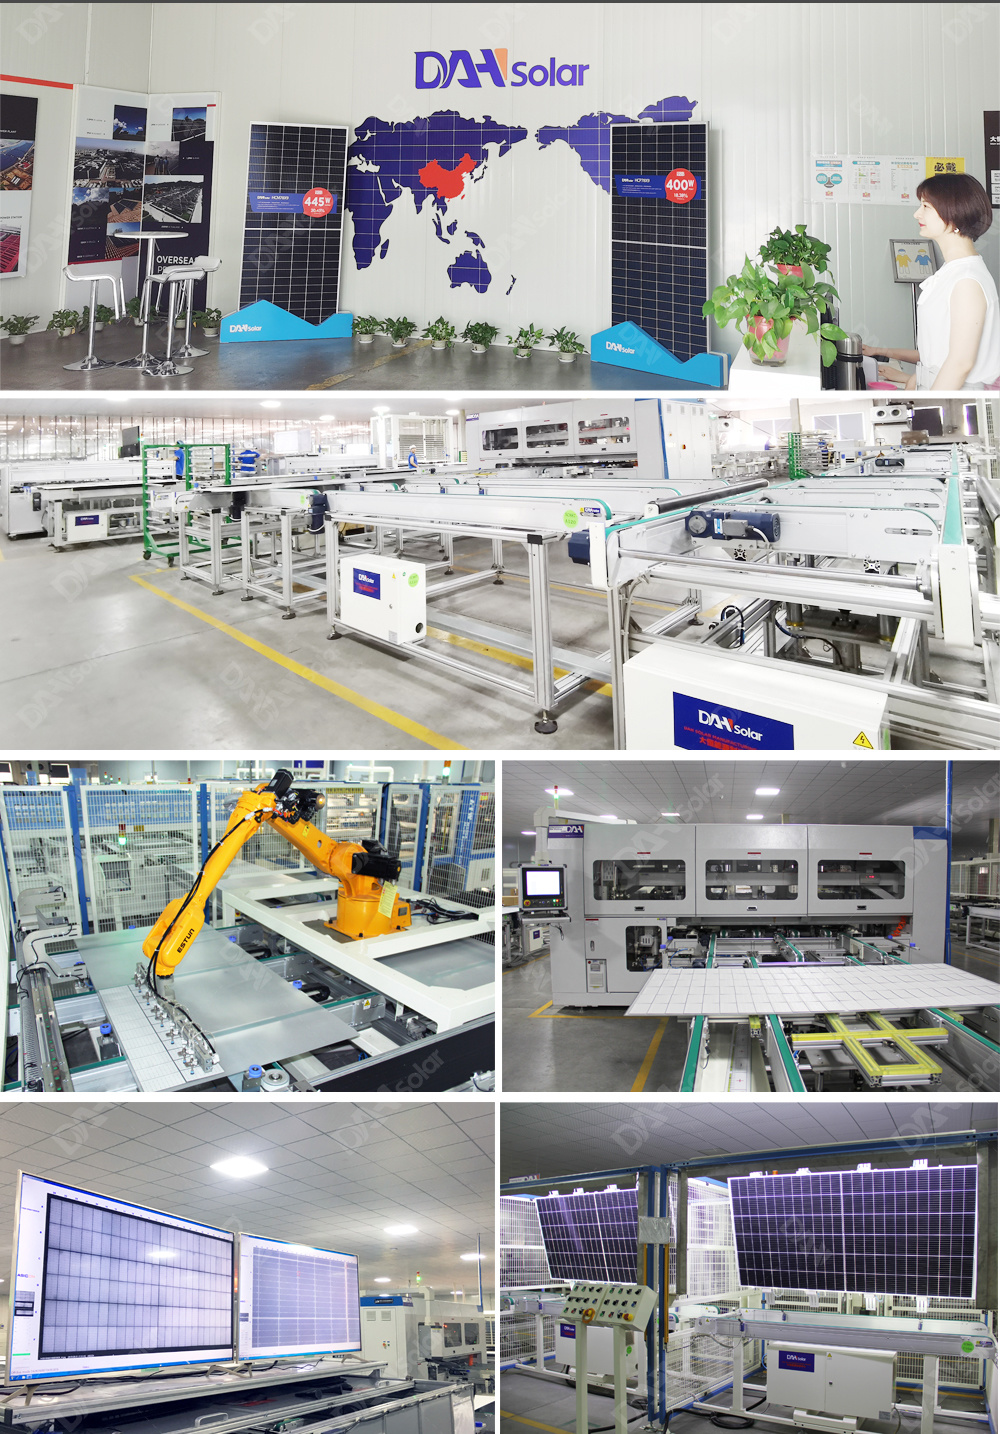 2kw 3kw 4kw 5 Kw Solar System Kit Price 5000W China Solar Panel Kit Price